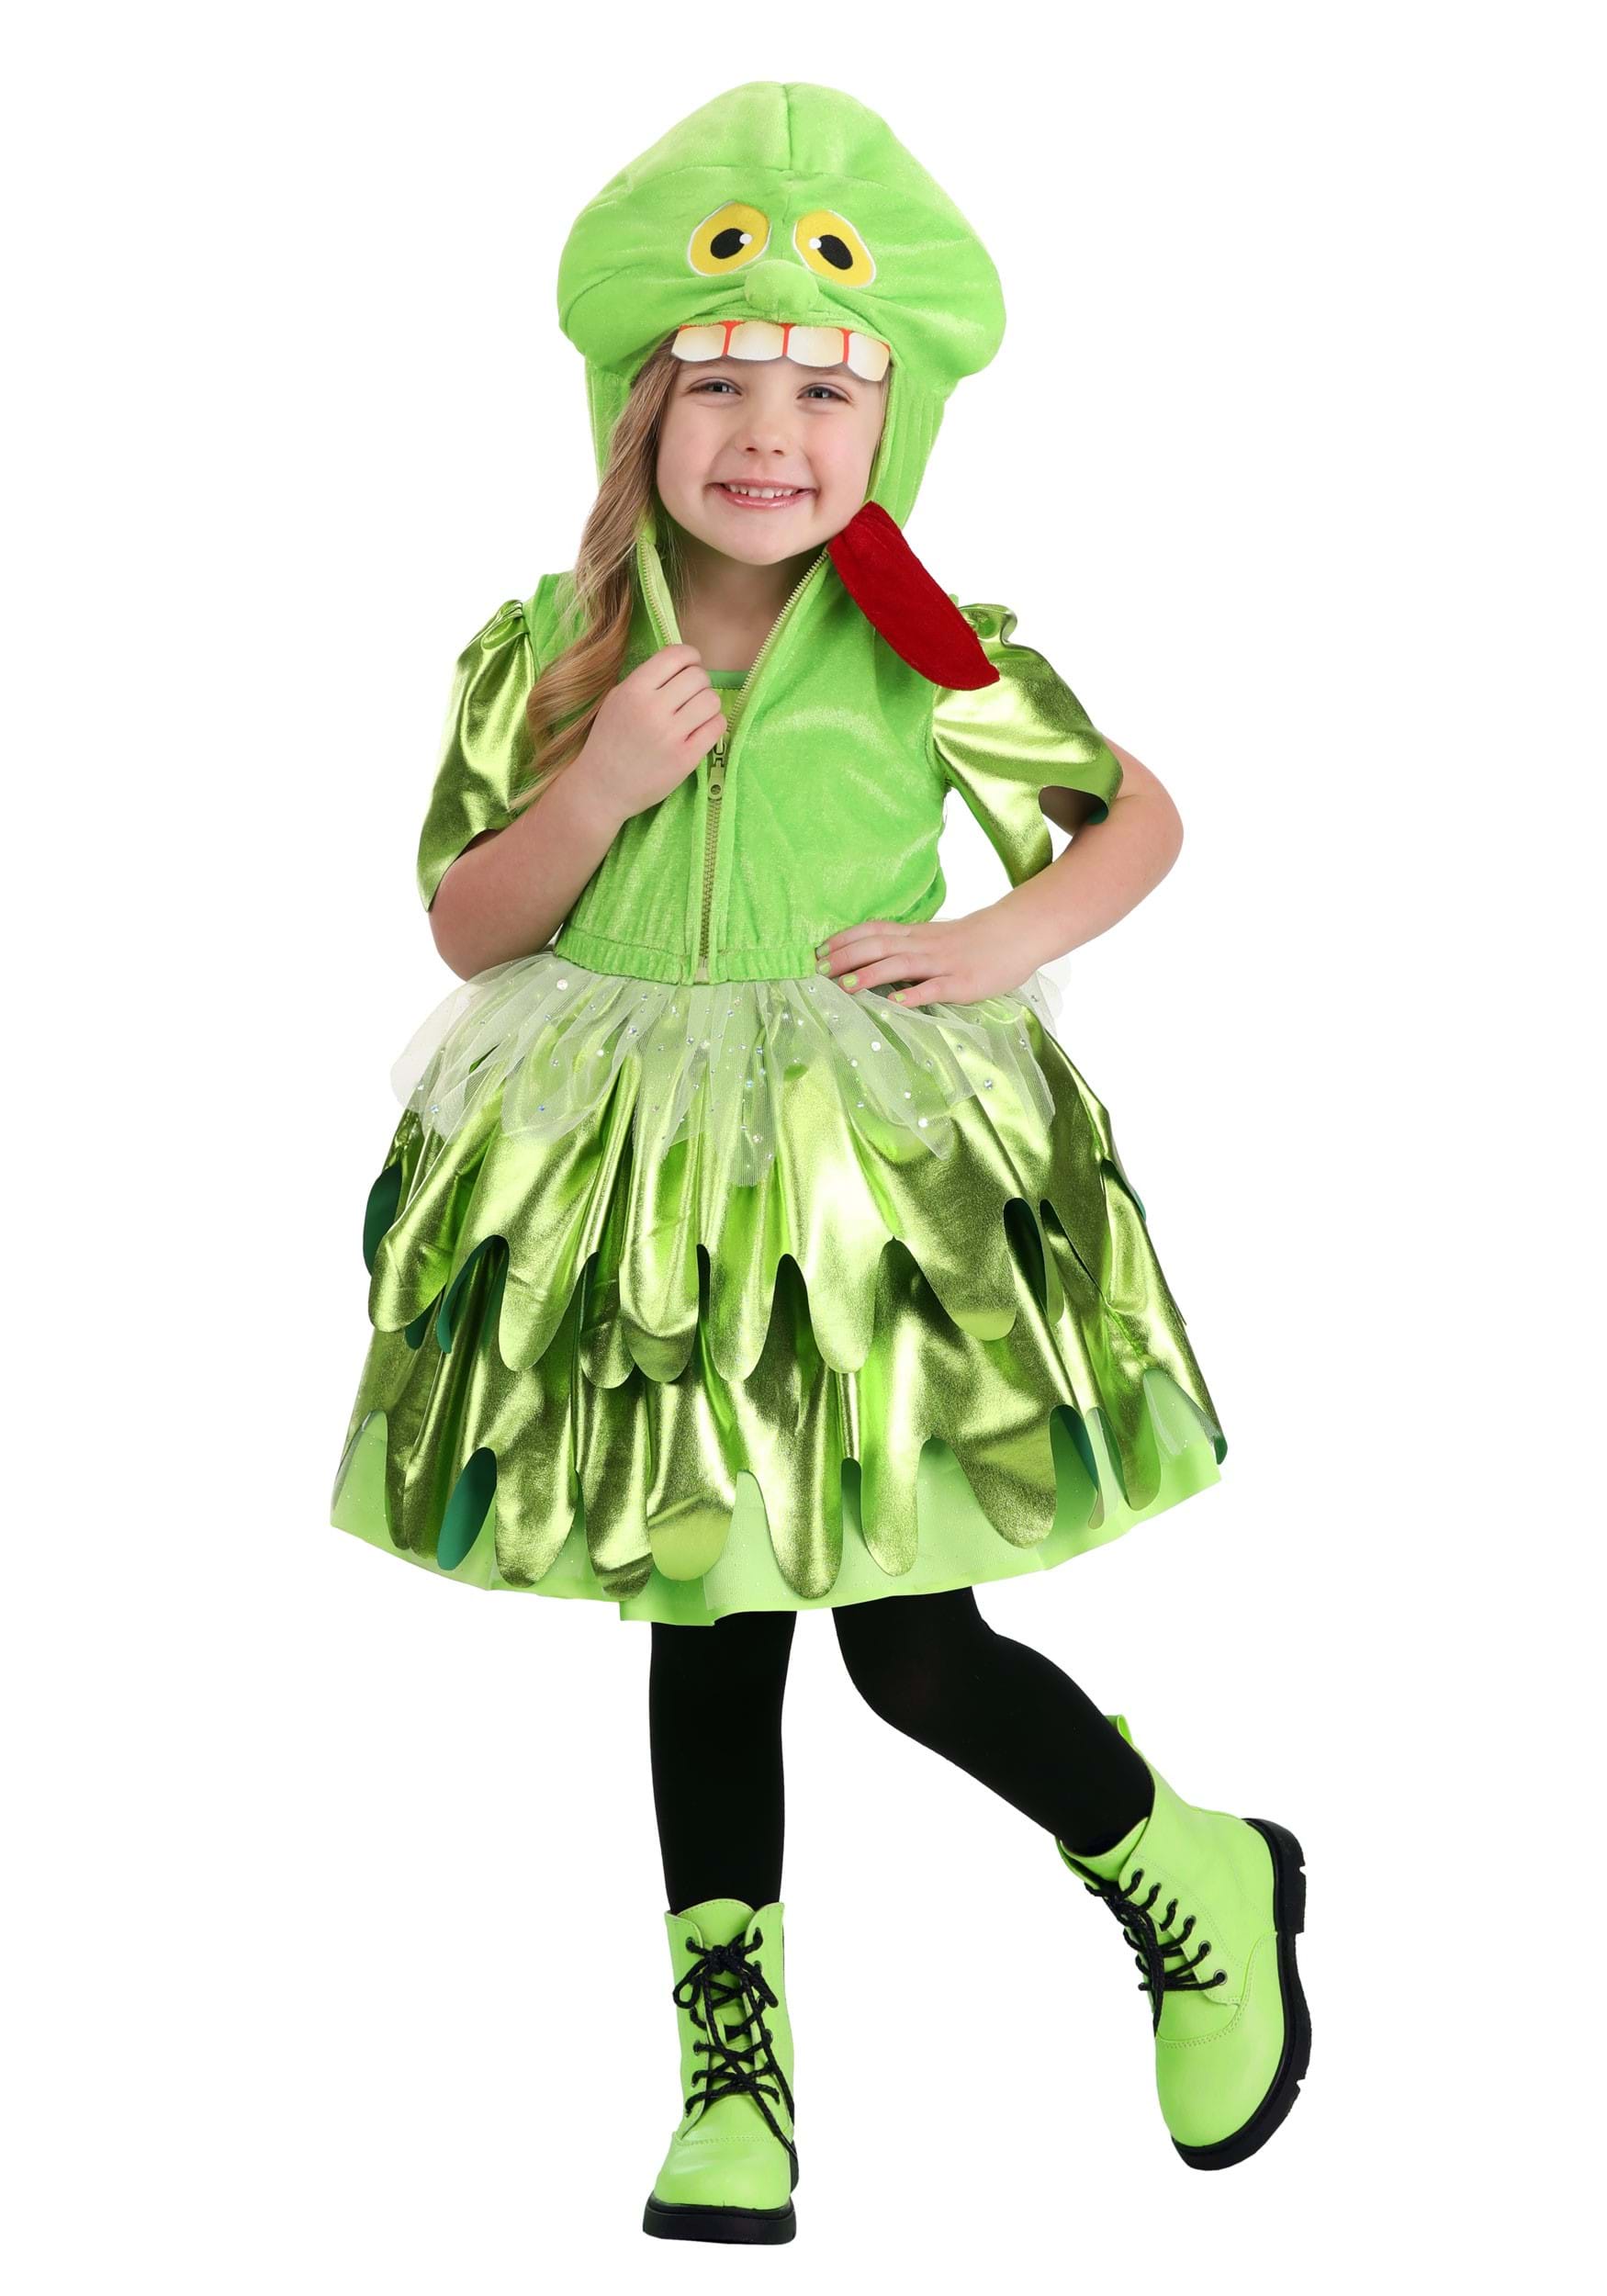 Ghostbusters Toddler Girls Slimer Costume